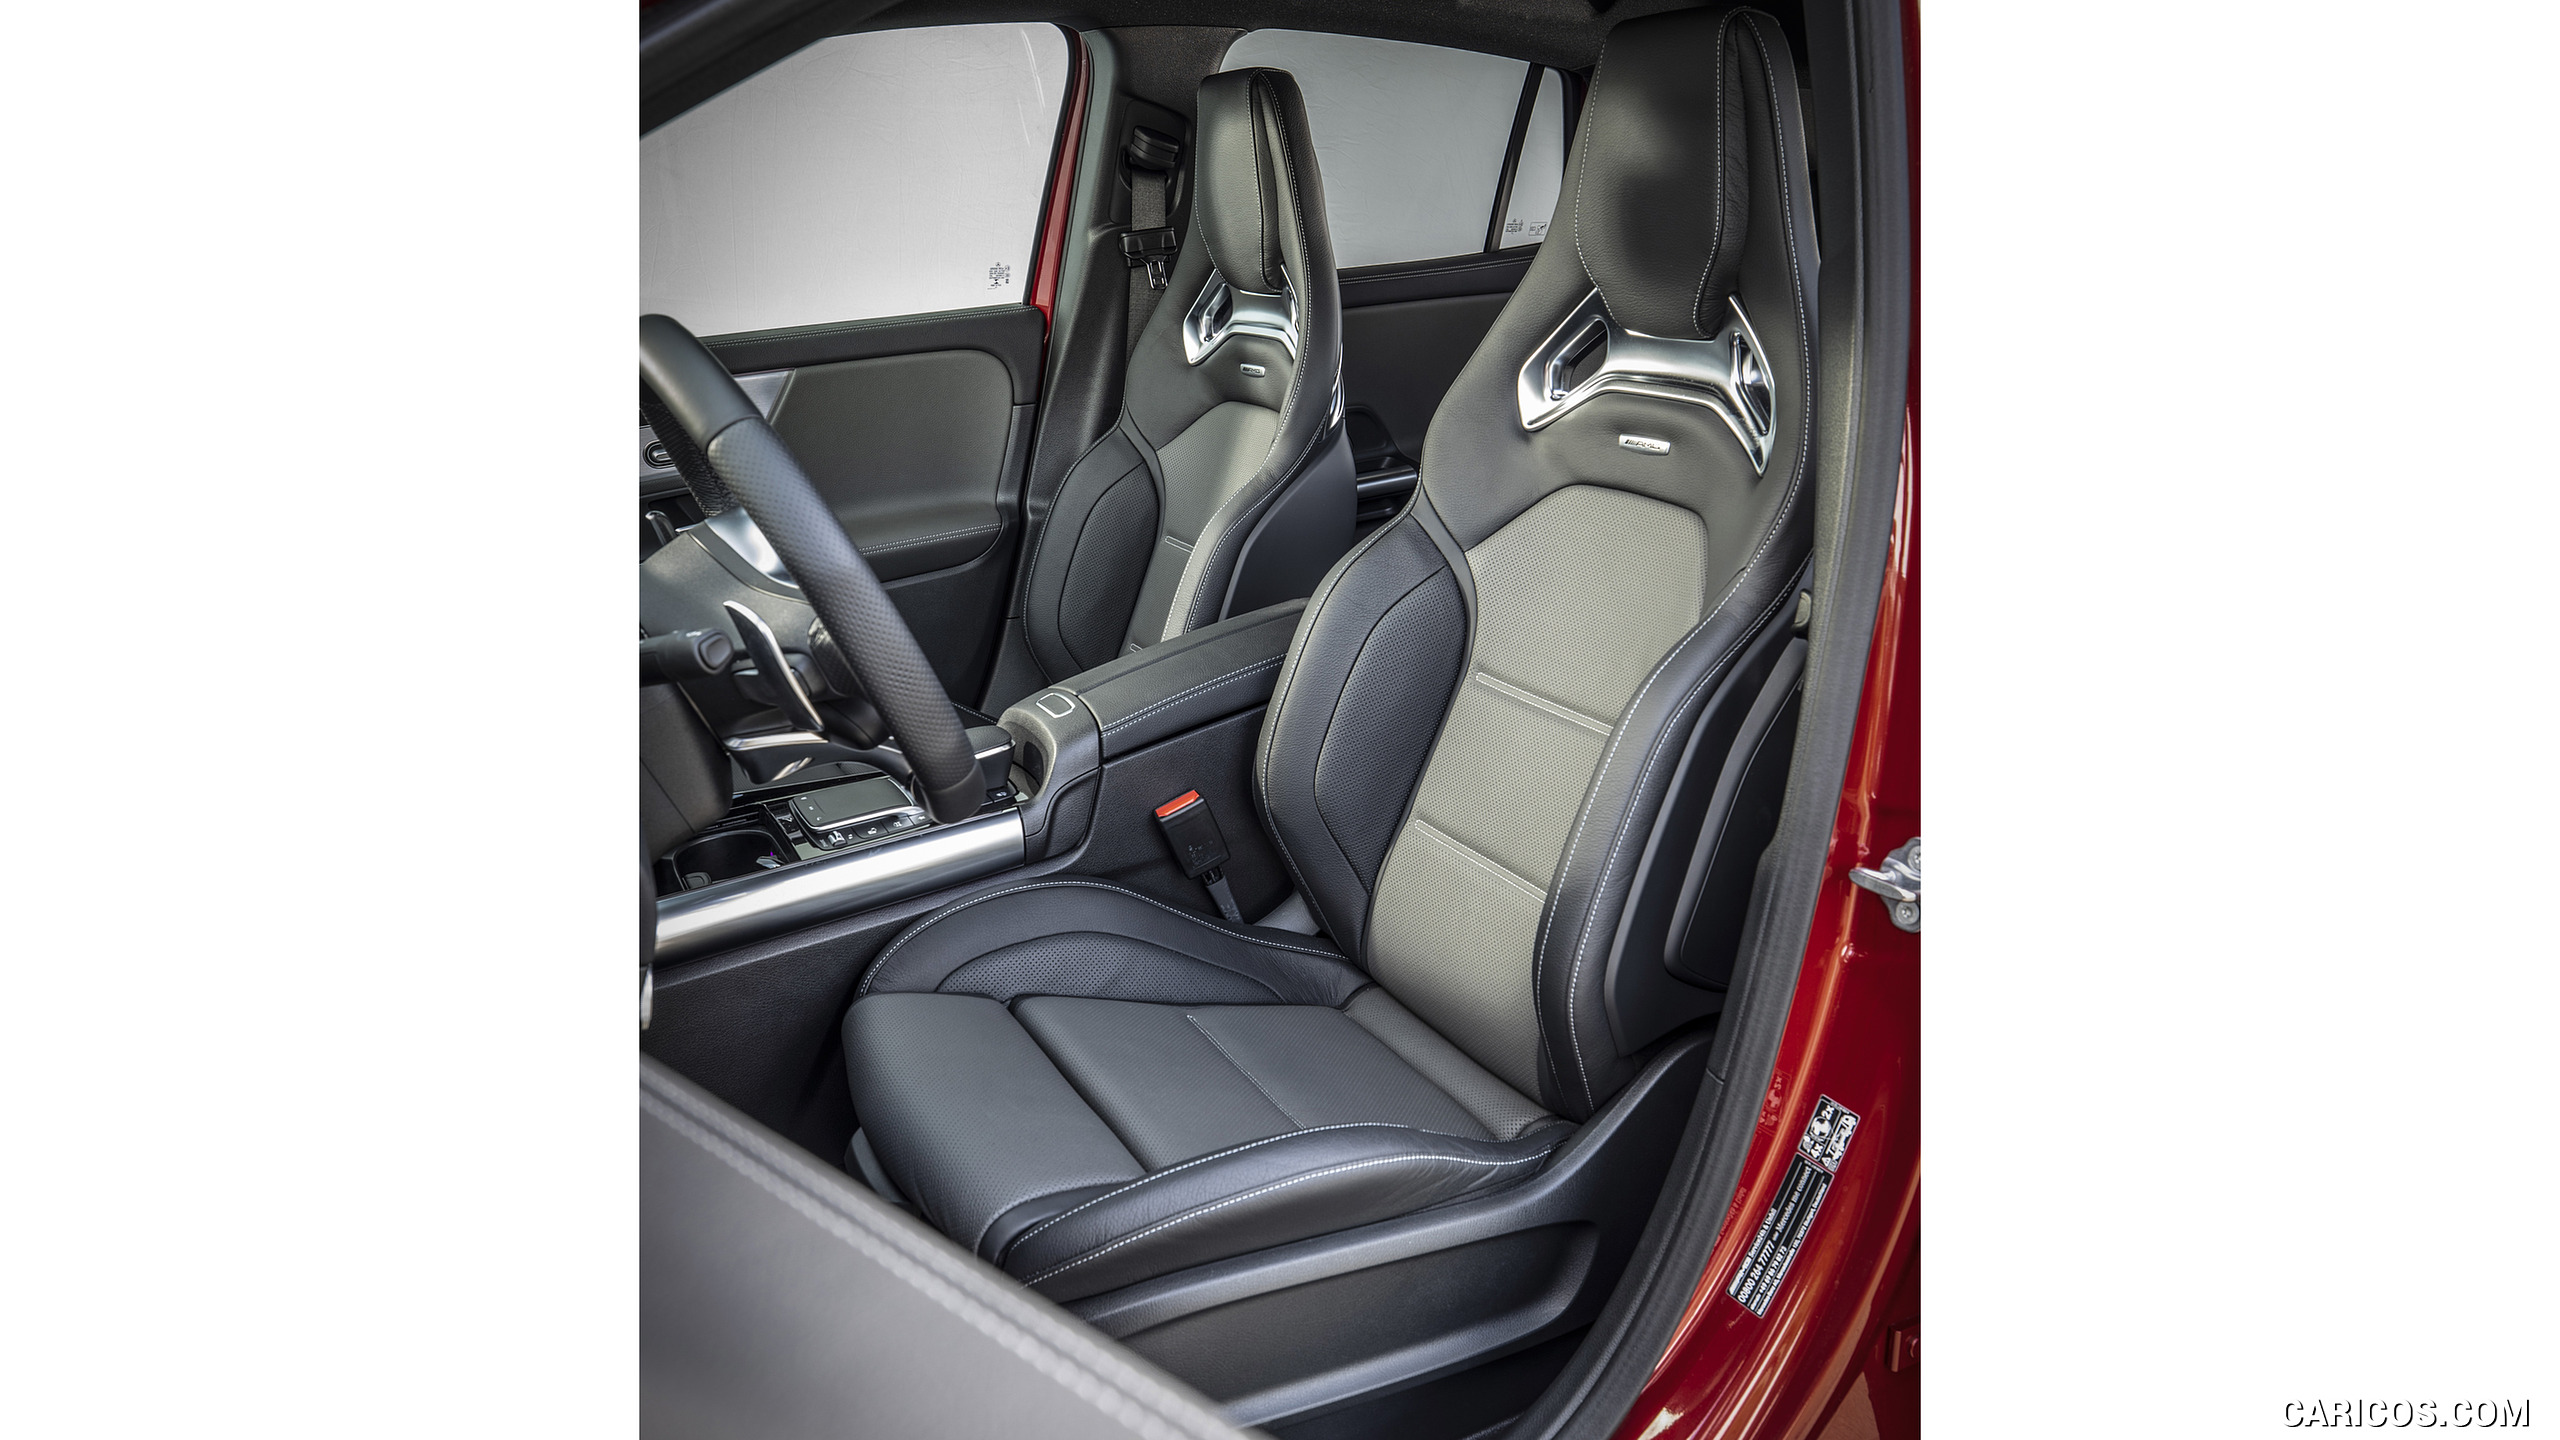 2021 Mercedes-AMG GLA 35 4MATIC - Interior, Front Seats, #58 of 104